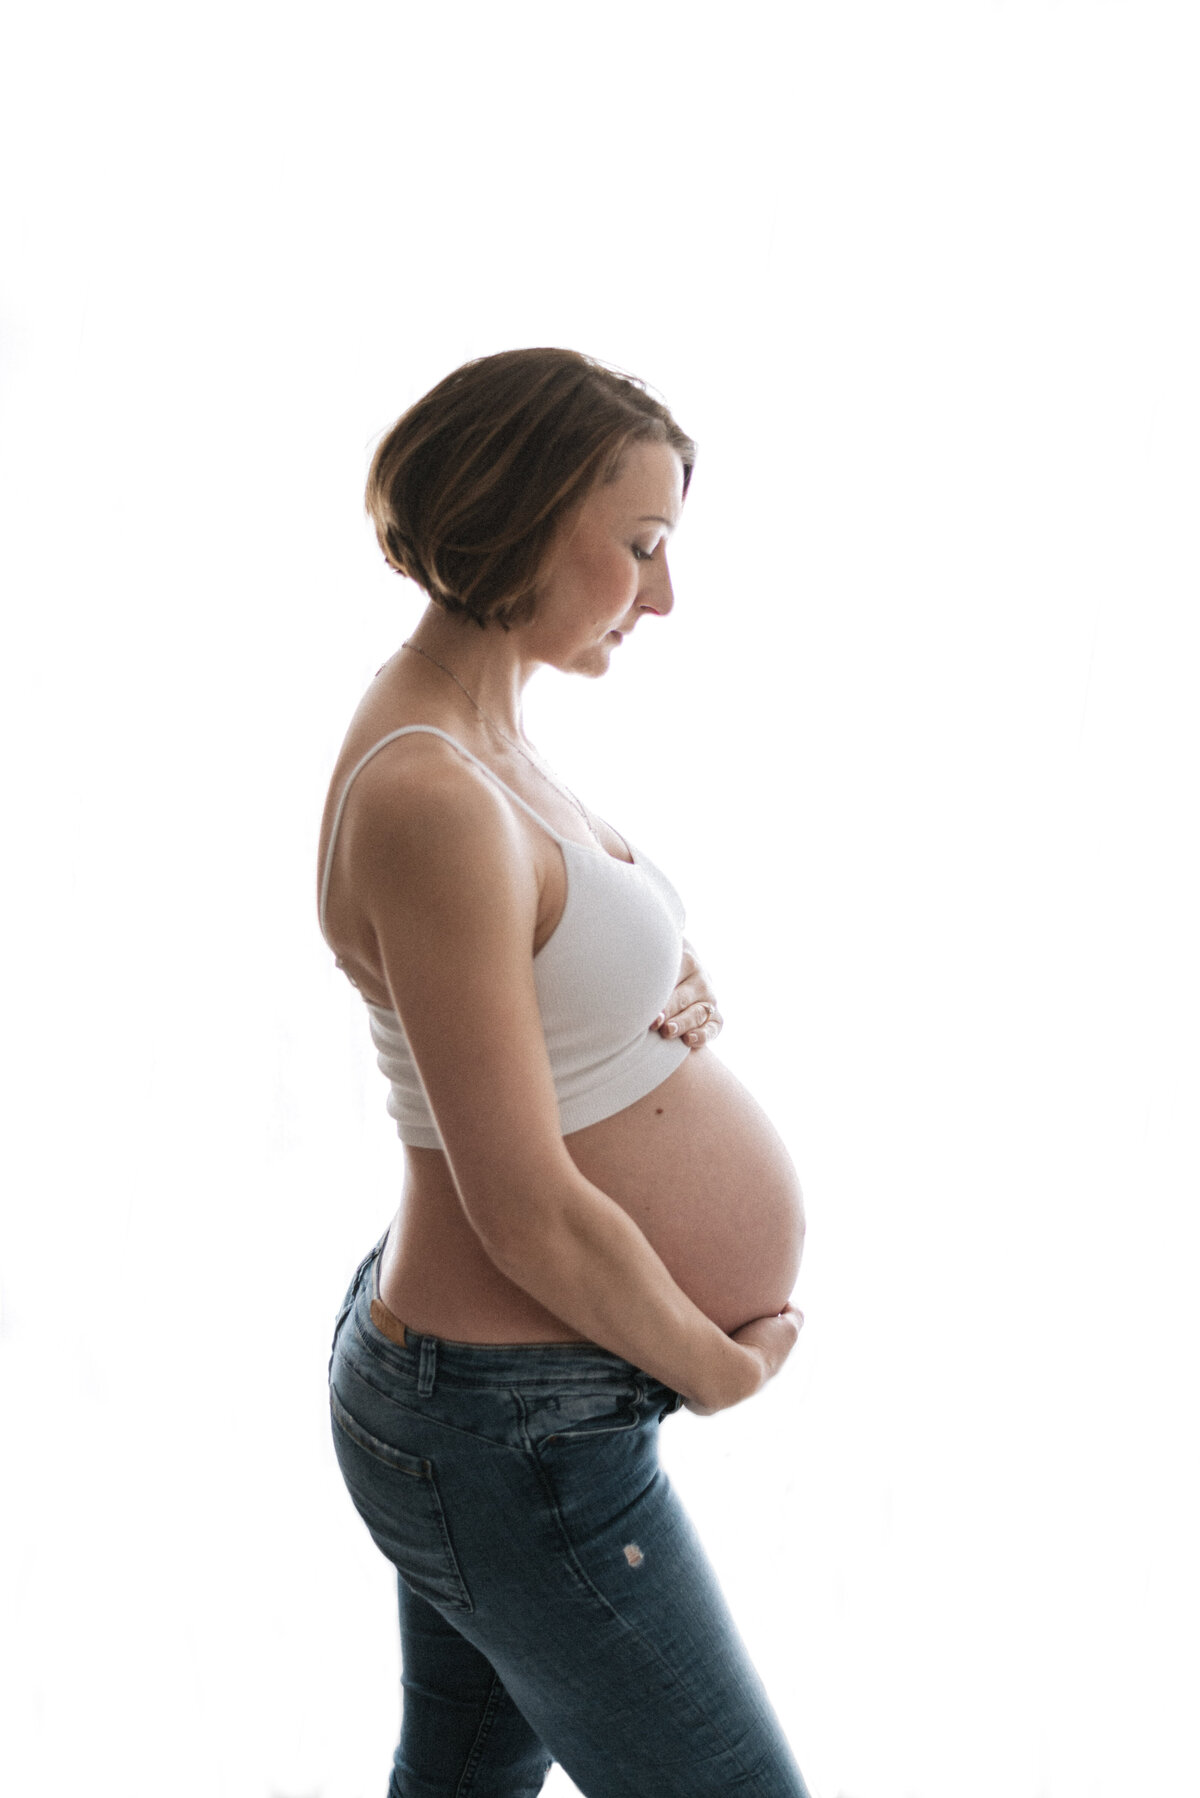 Mother holding pregnant bump on maternity photoshoot in Billingshurst